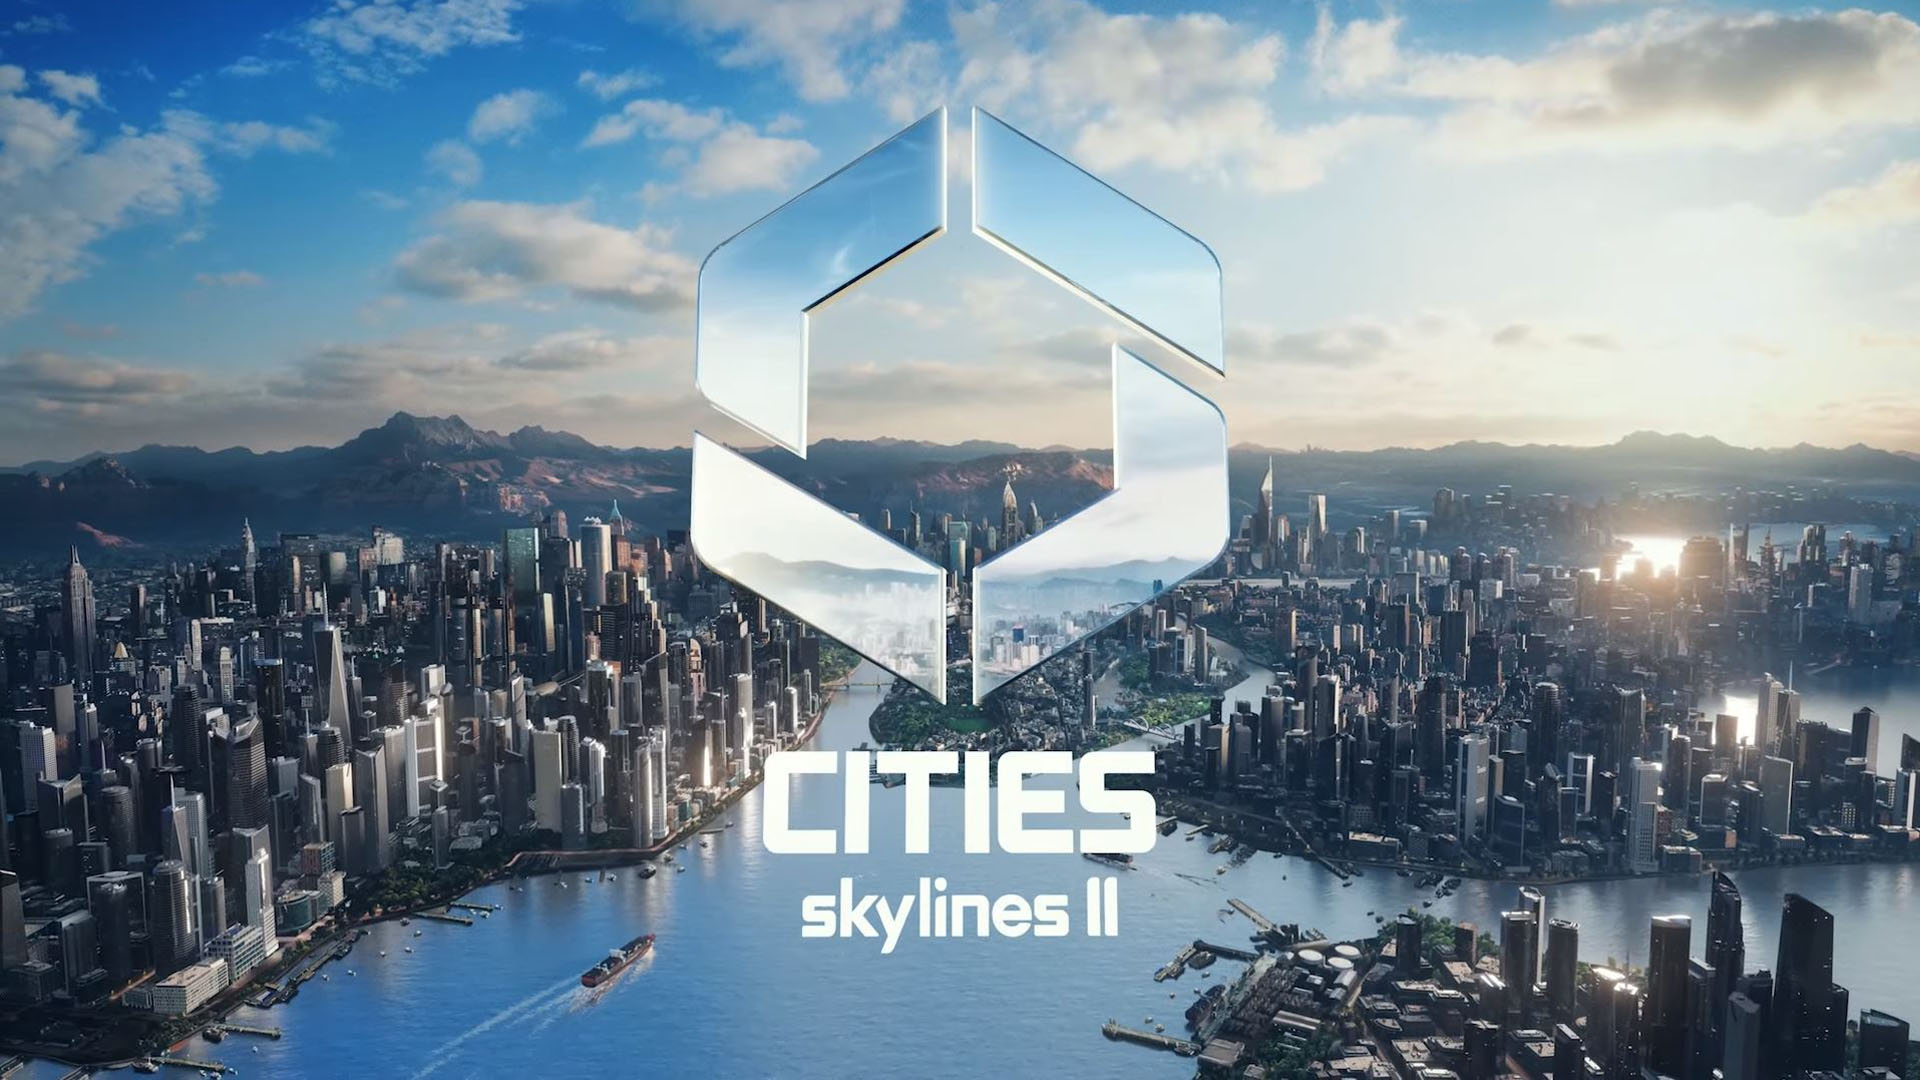 Cities: Skylines II announced